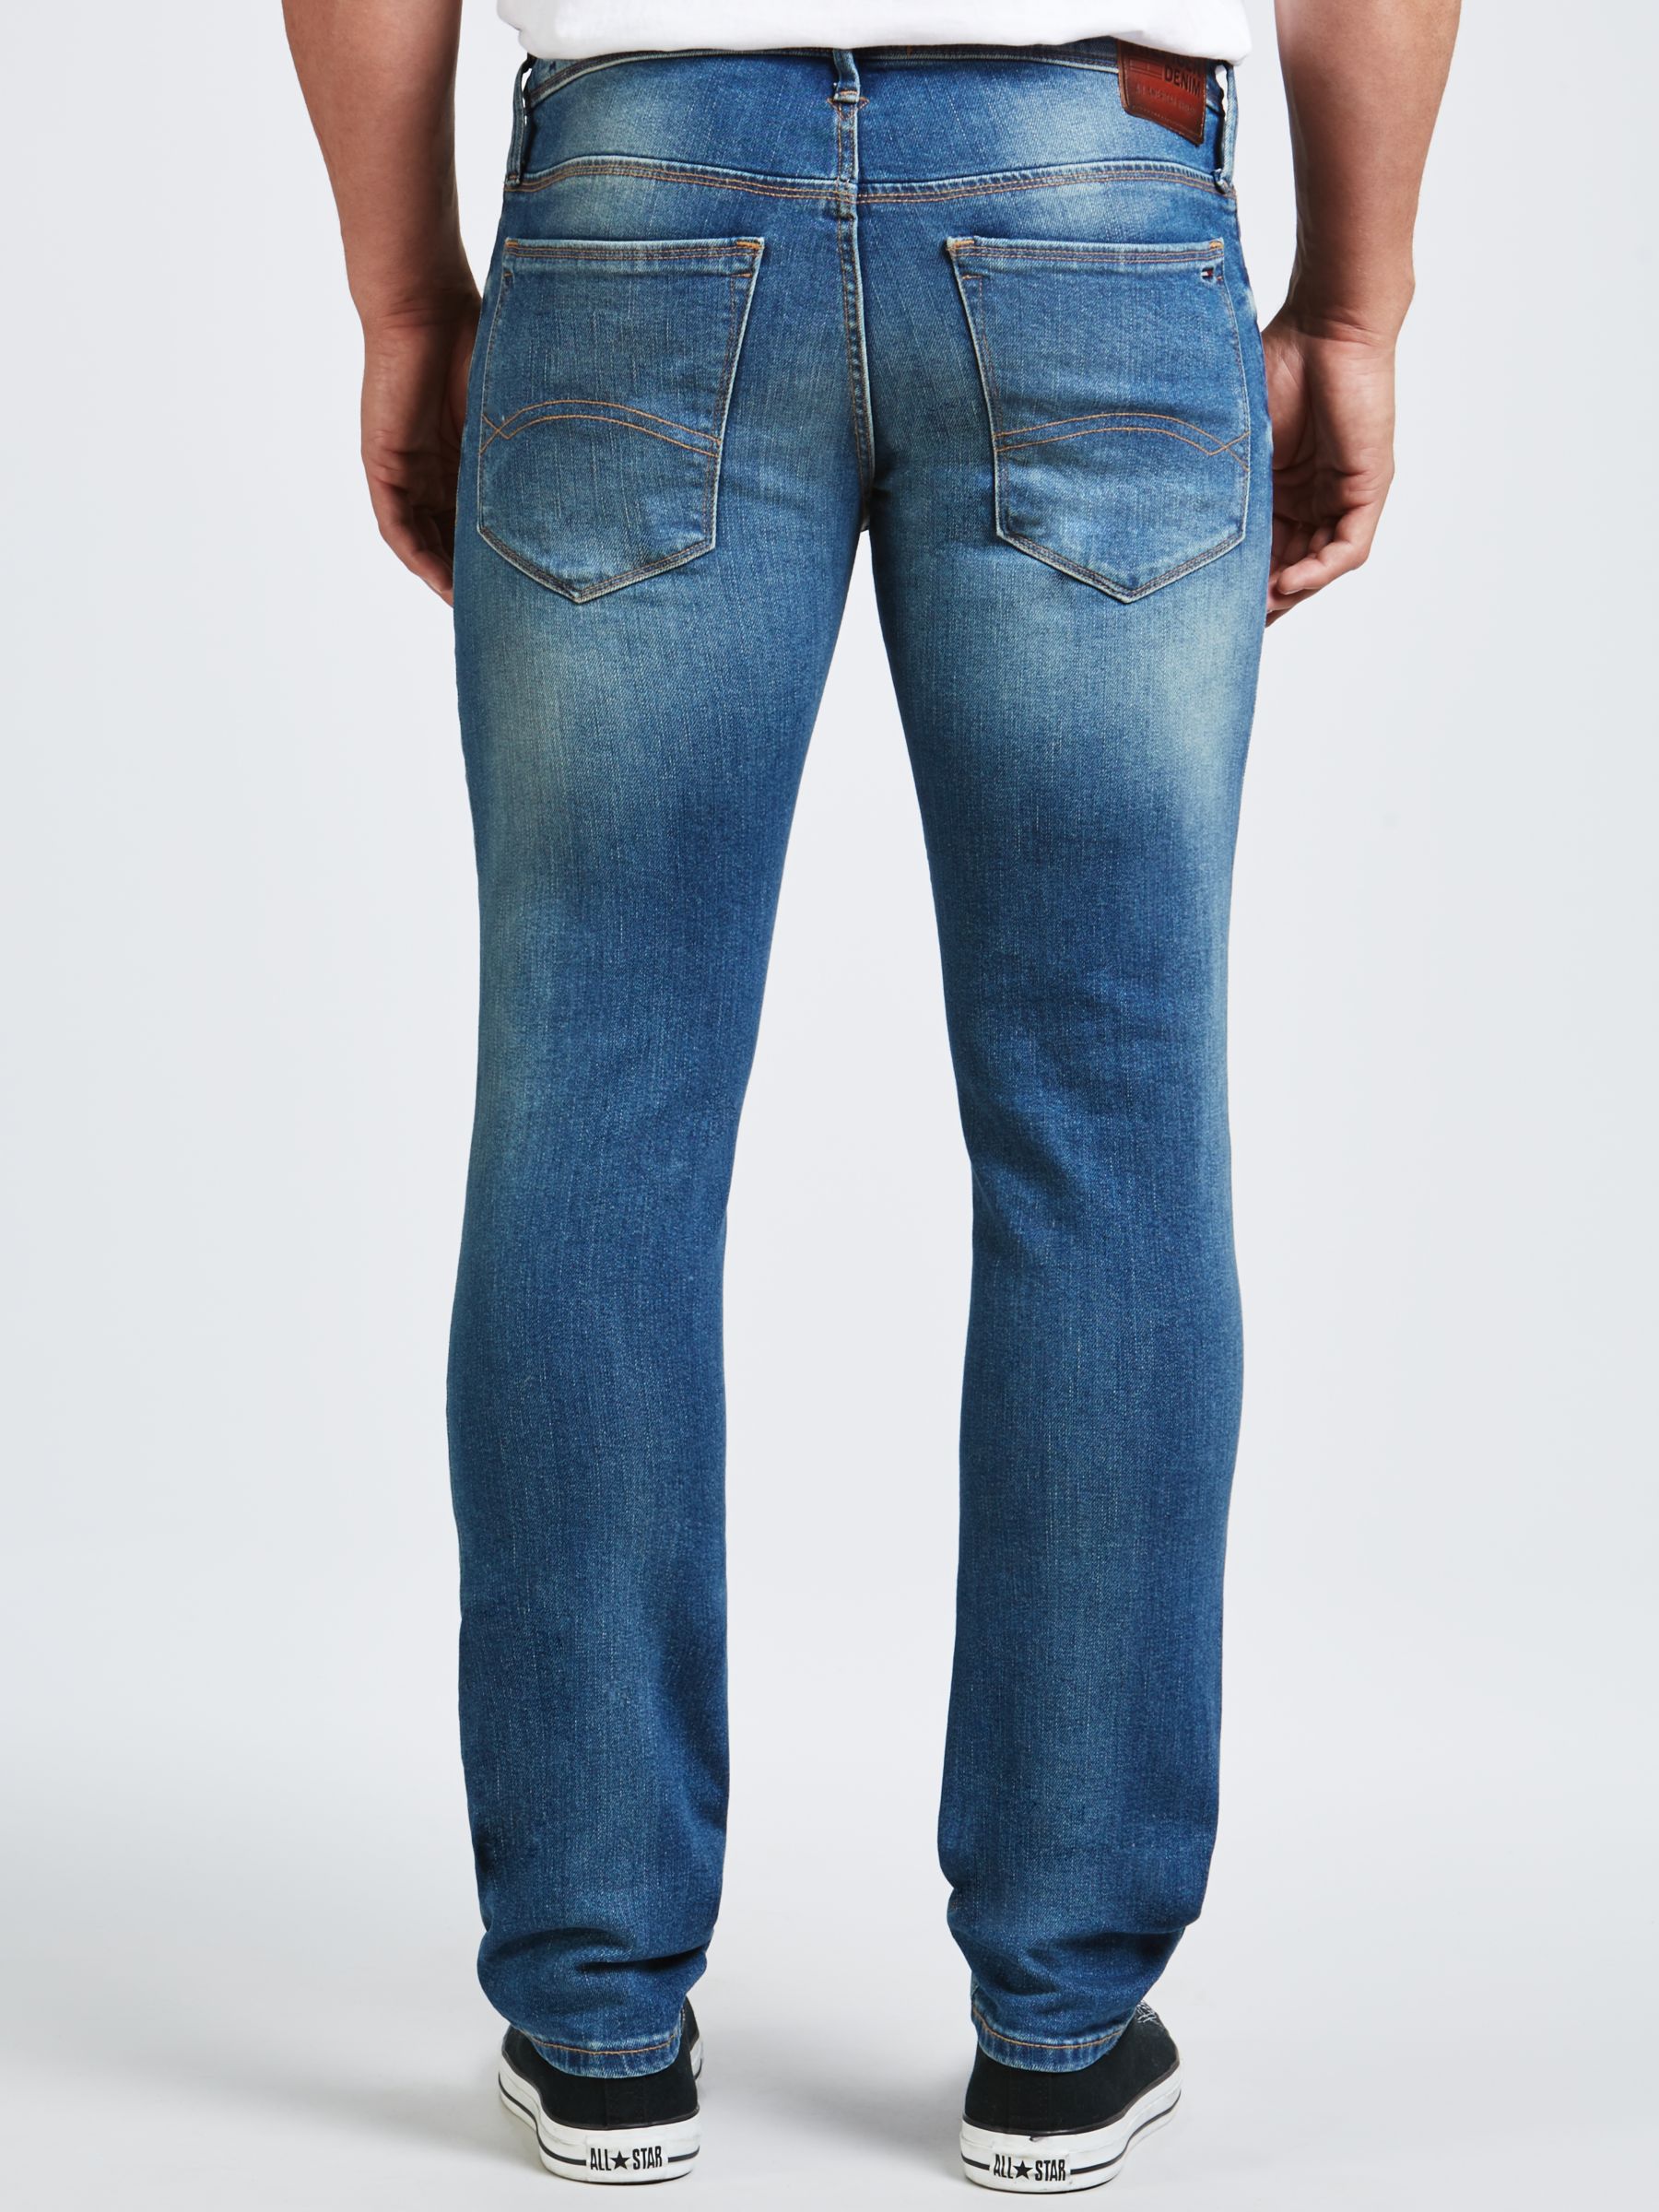 hilfiger sidney skinny jeans